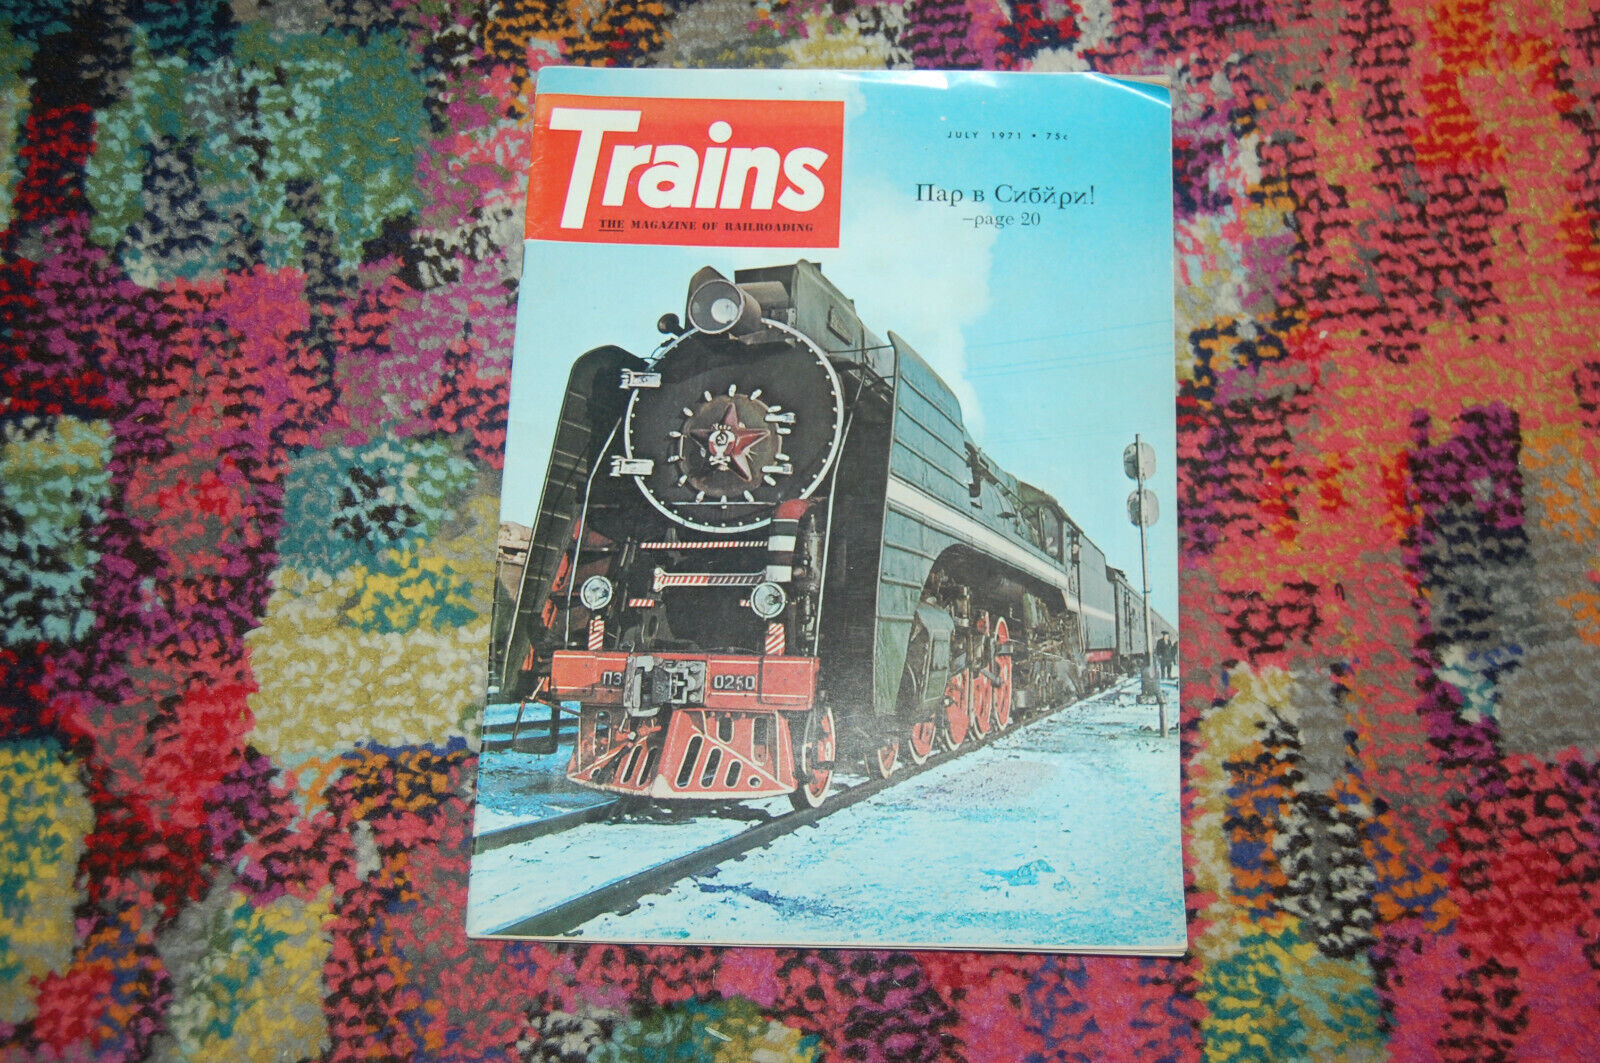 Trains The Magazine Of Railroading, July 1971